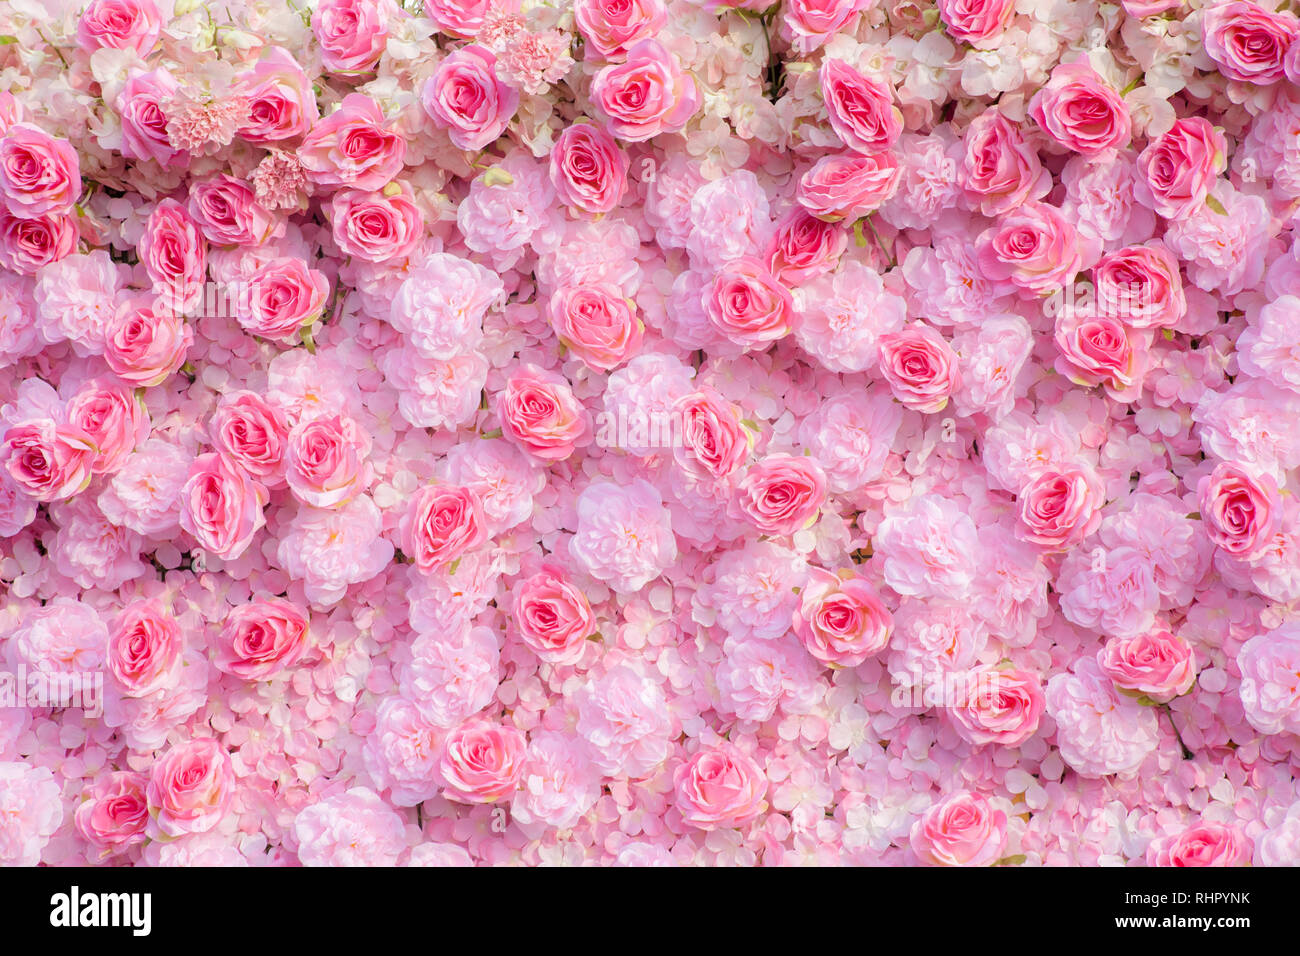 28,070 Pink Flower 3d Wallpaper Images, Stock Photos & Vectors |  Shutterstock